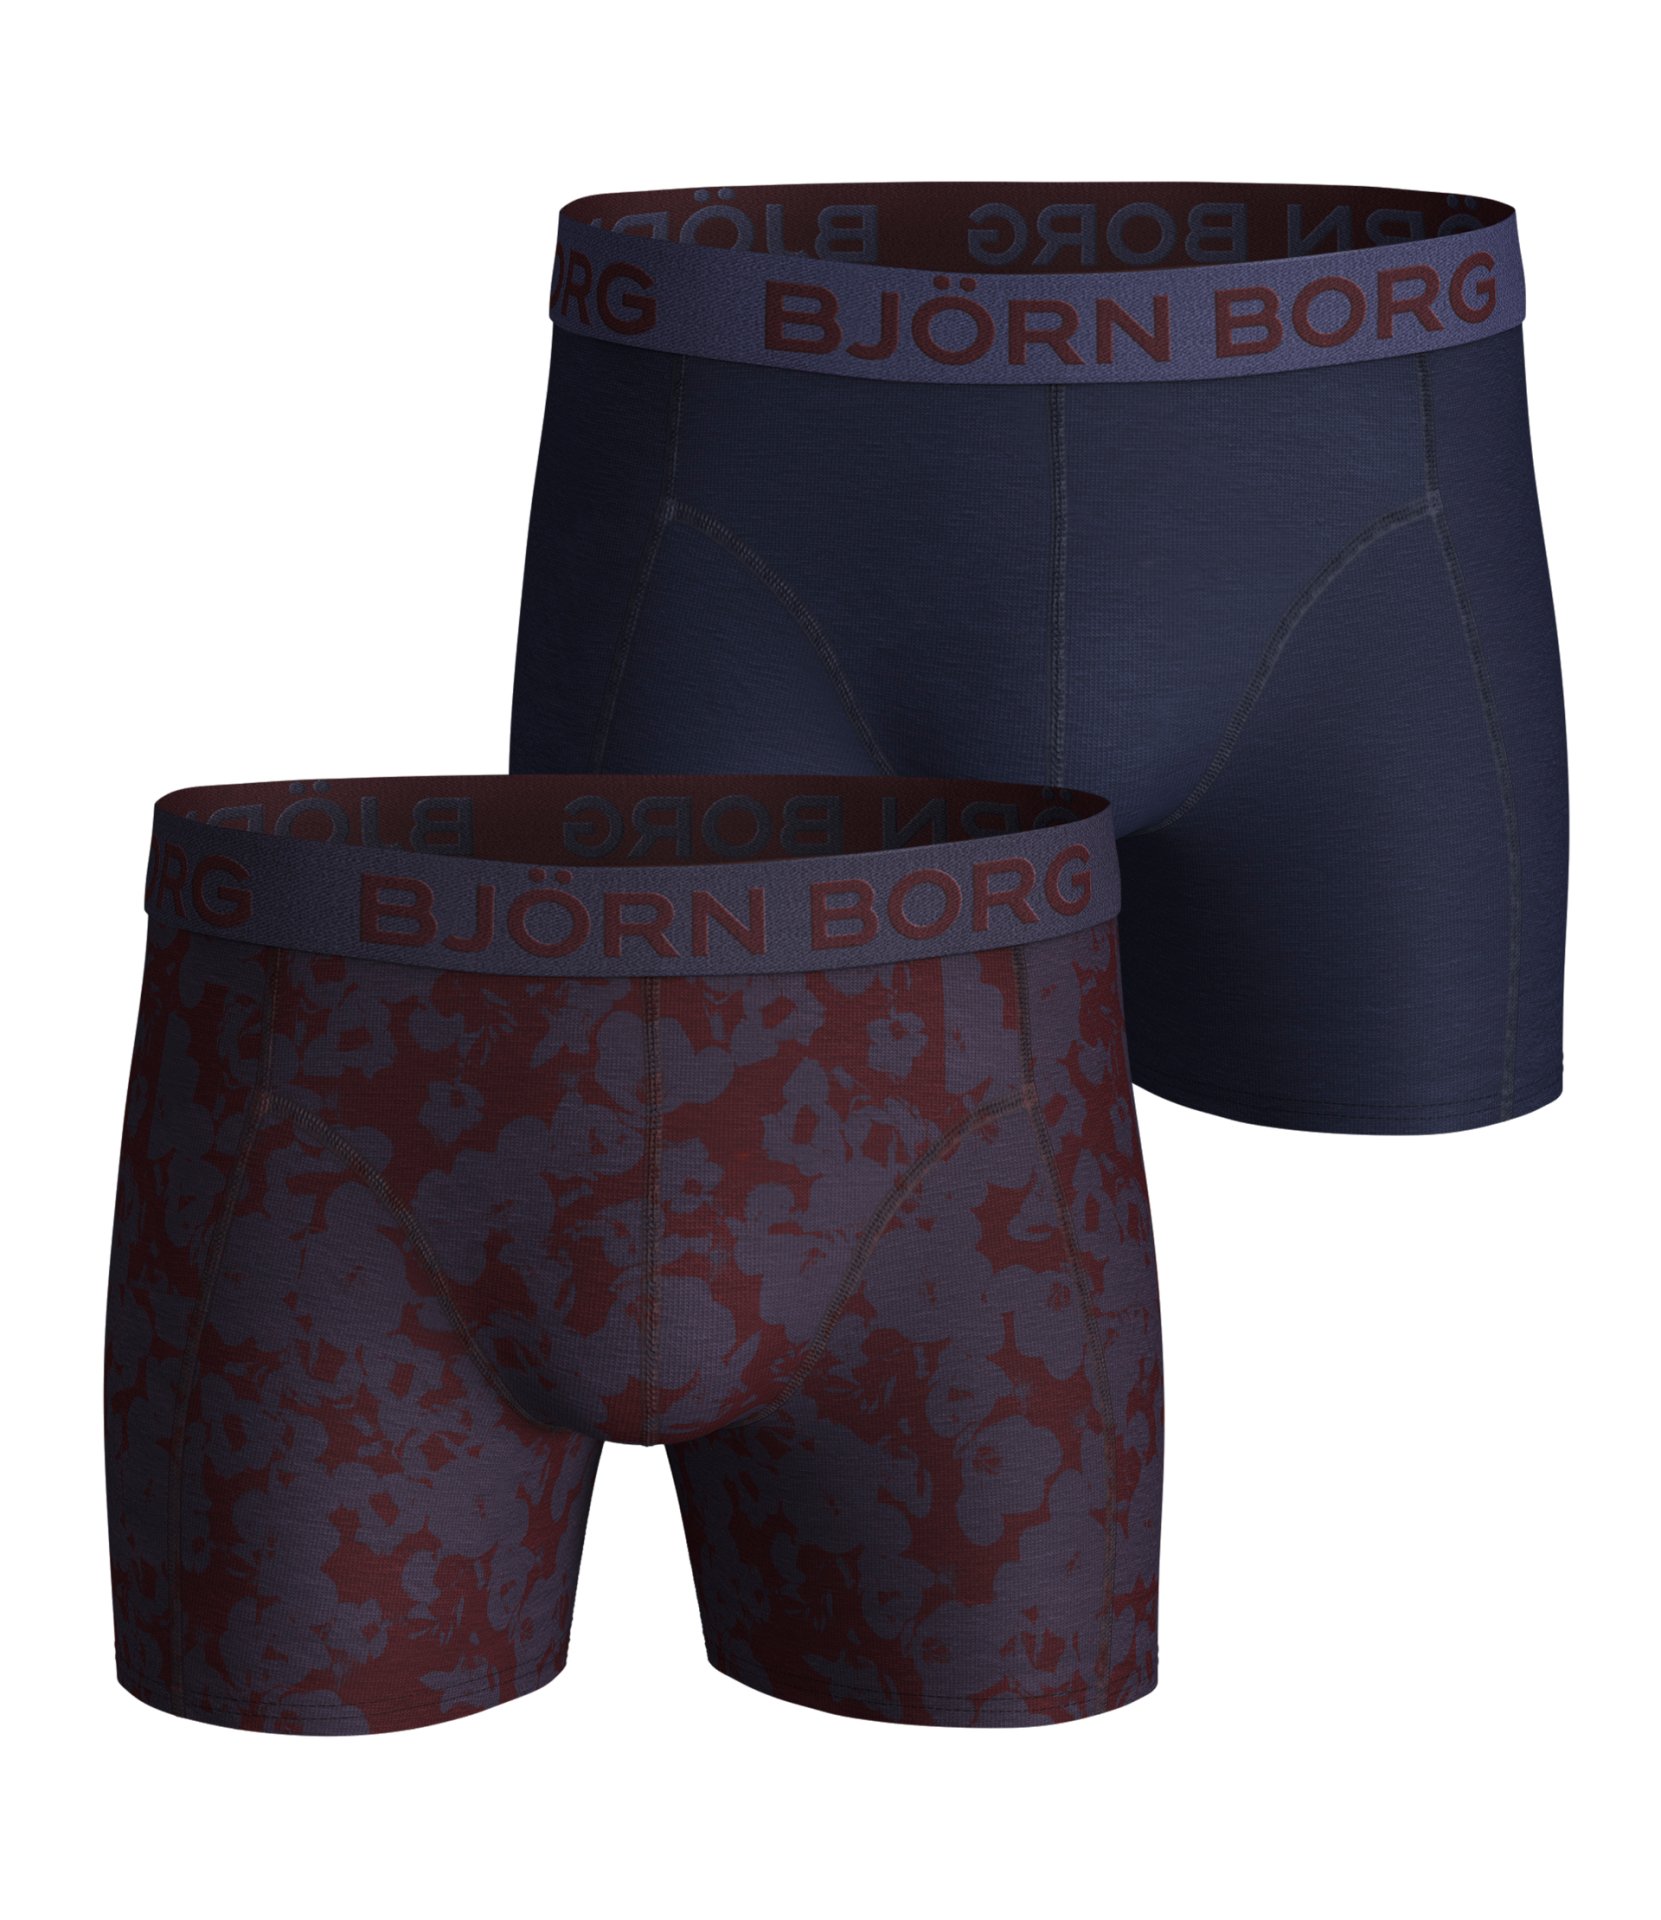 BJORN BORG - Ανδρικά εσώρουχα boxer σετ των 2 BJORN BORG μπλε - μπορντό